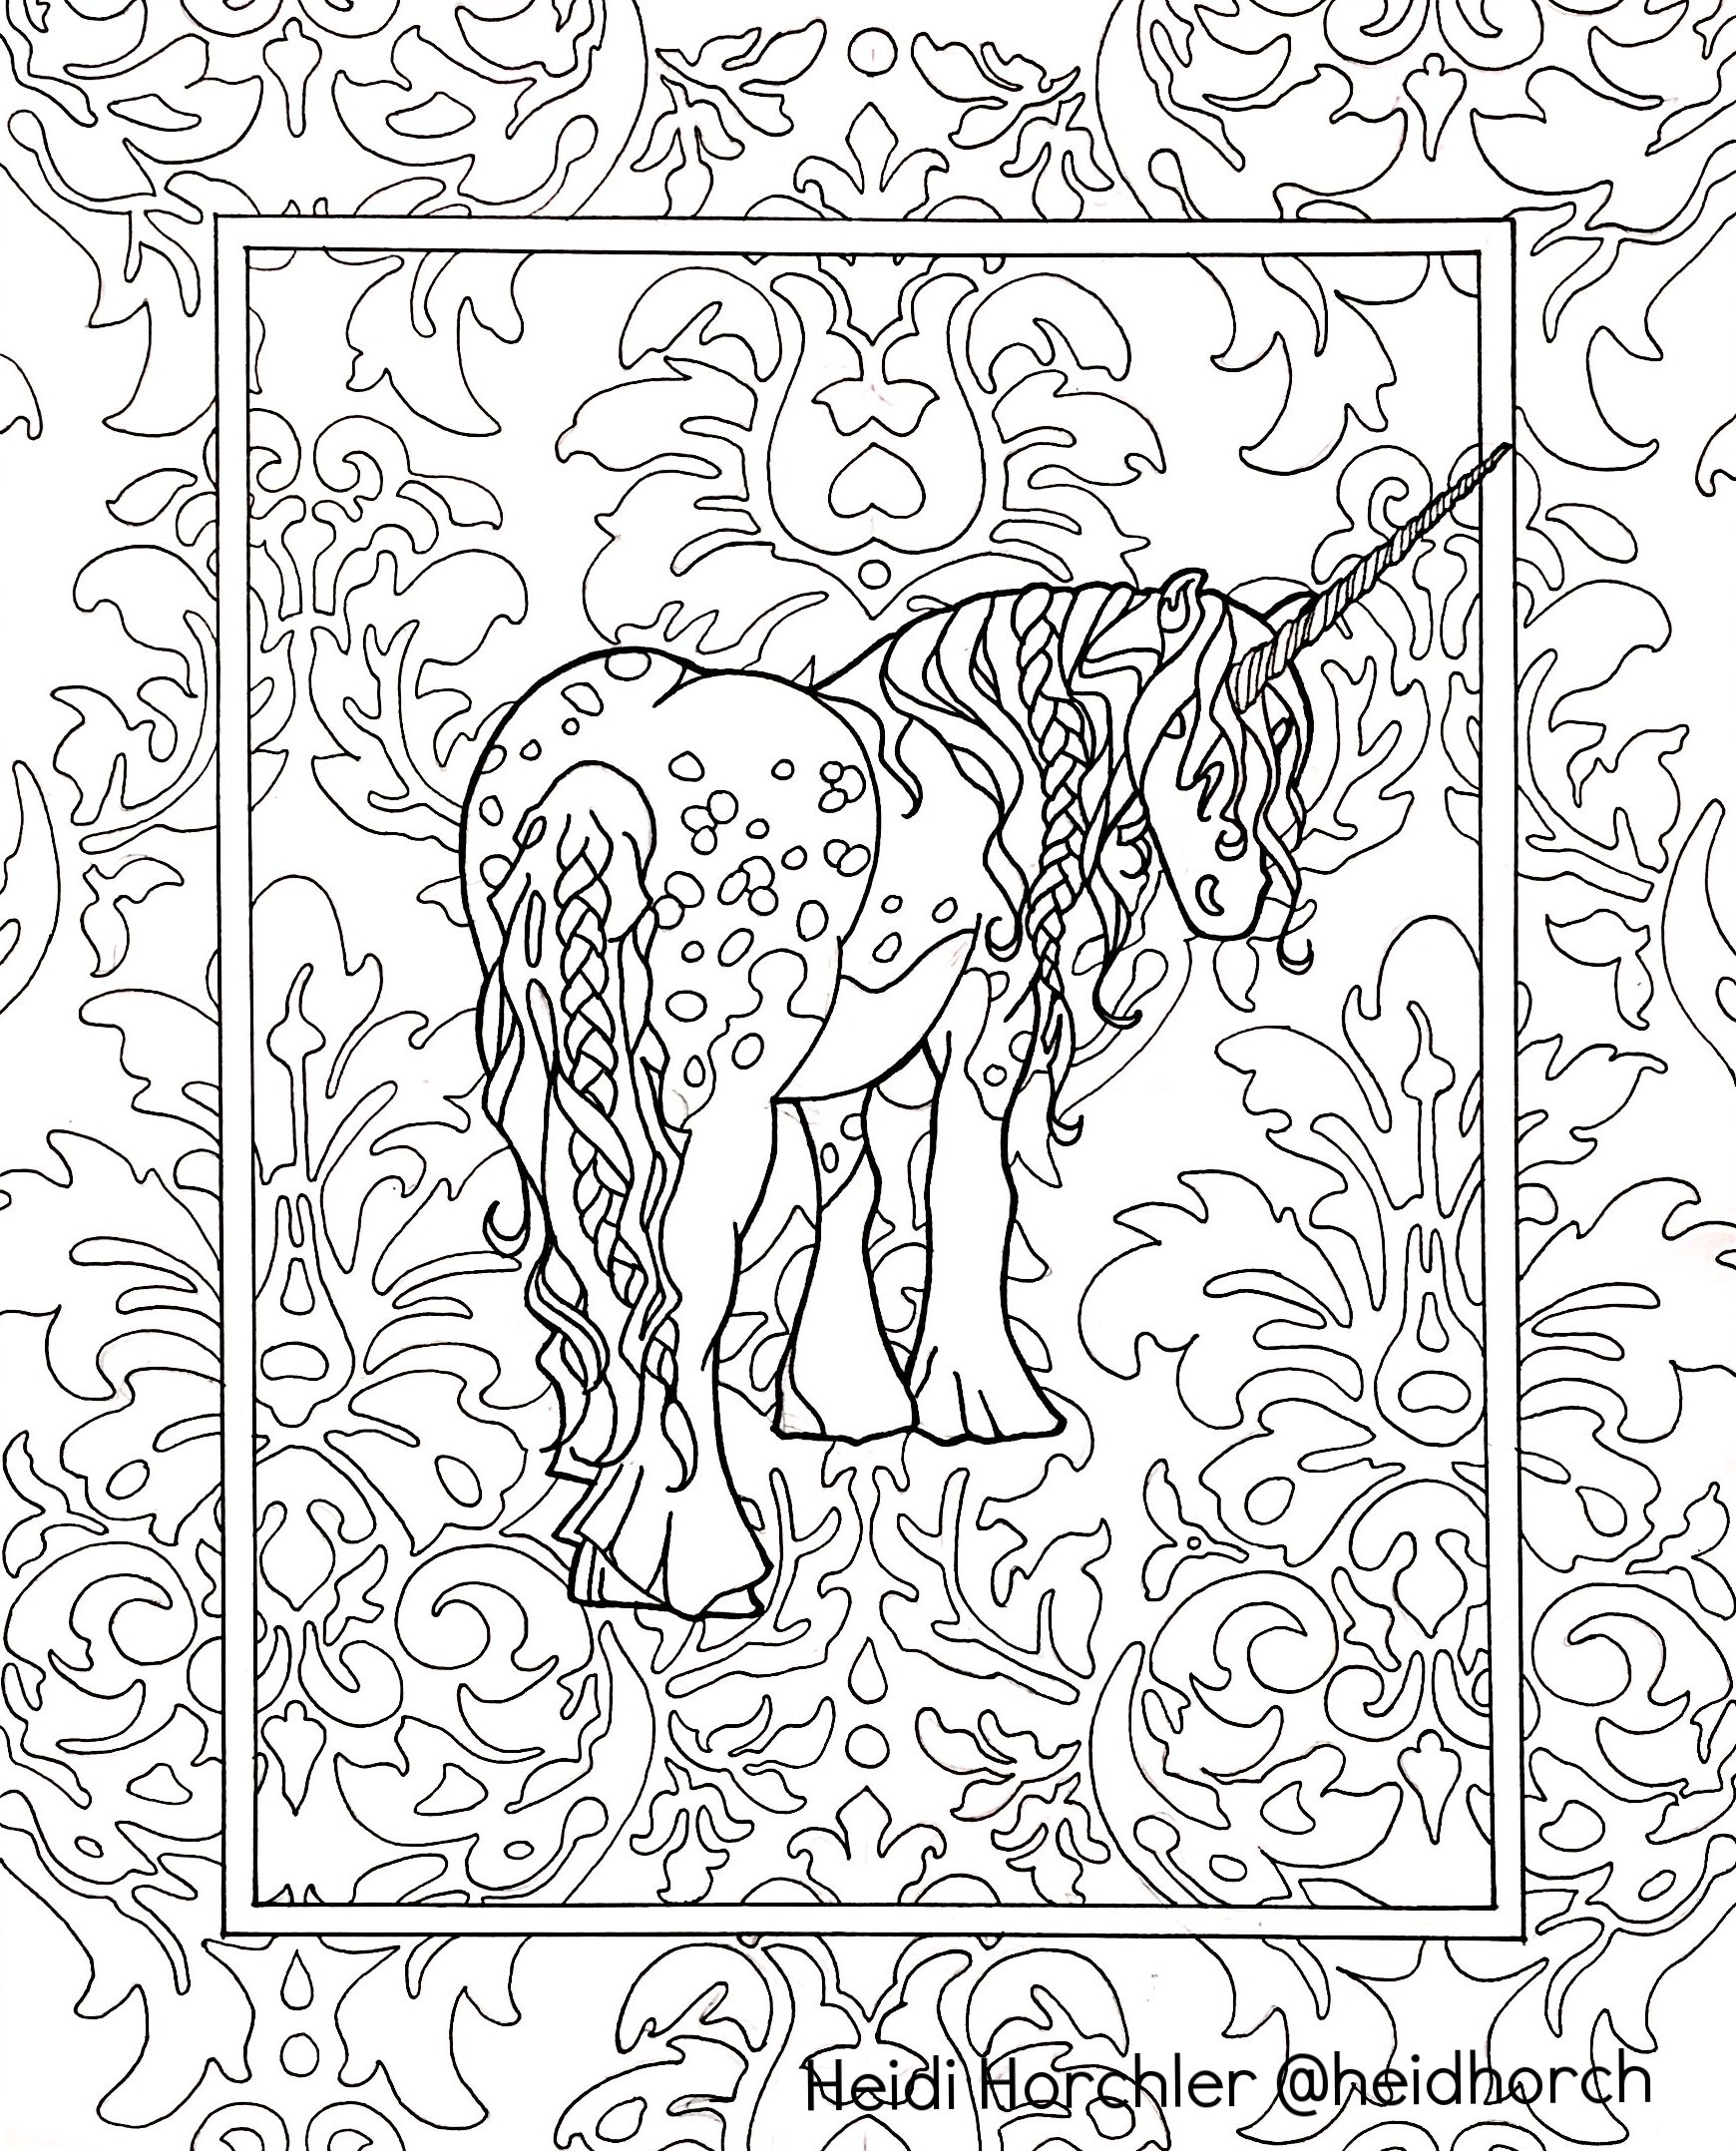 Unicorn - Daydream Odyssey coloring book